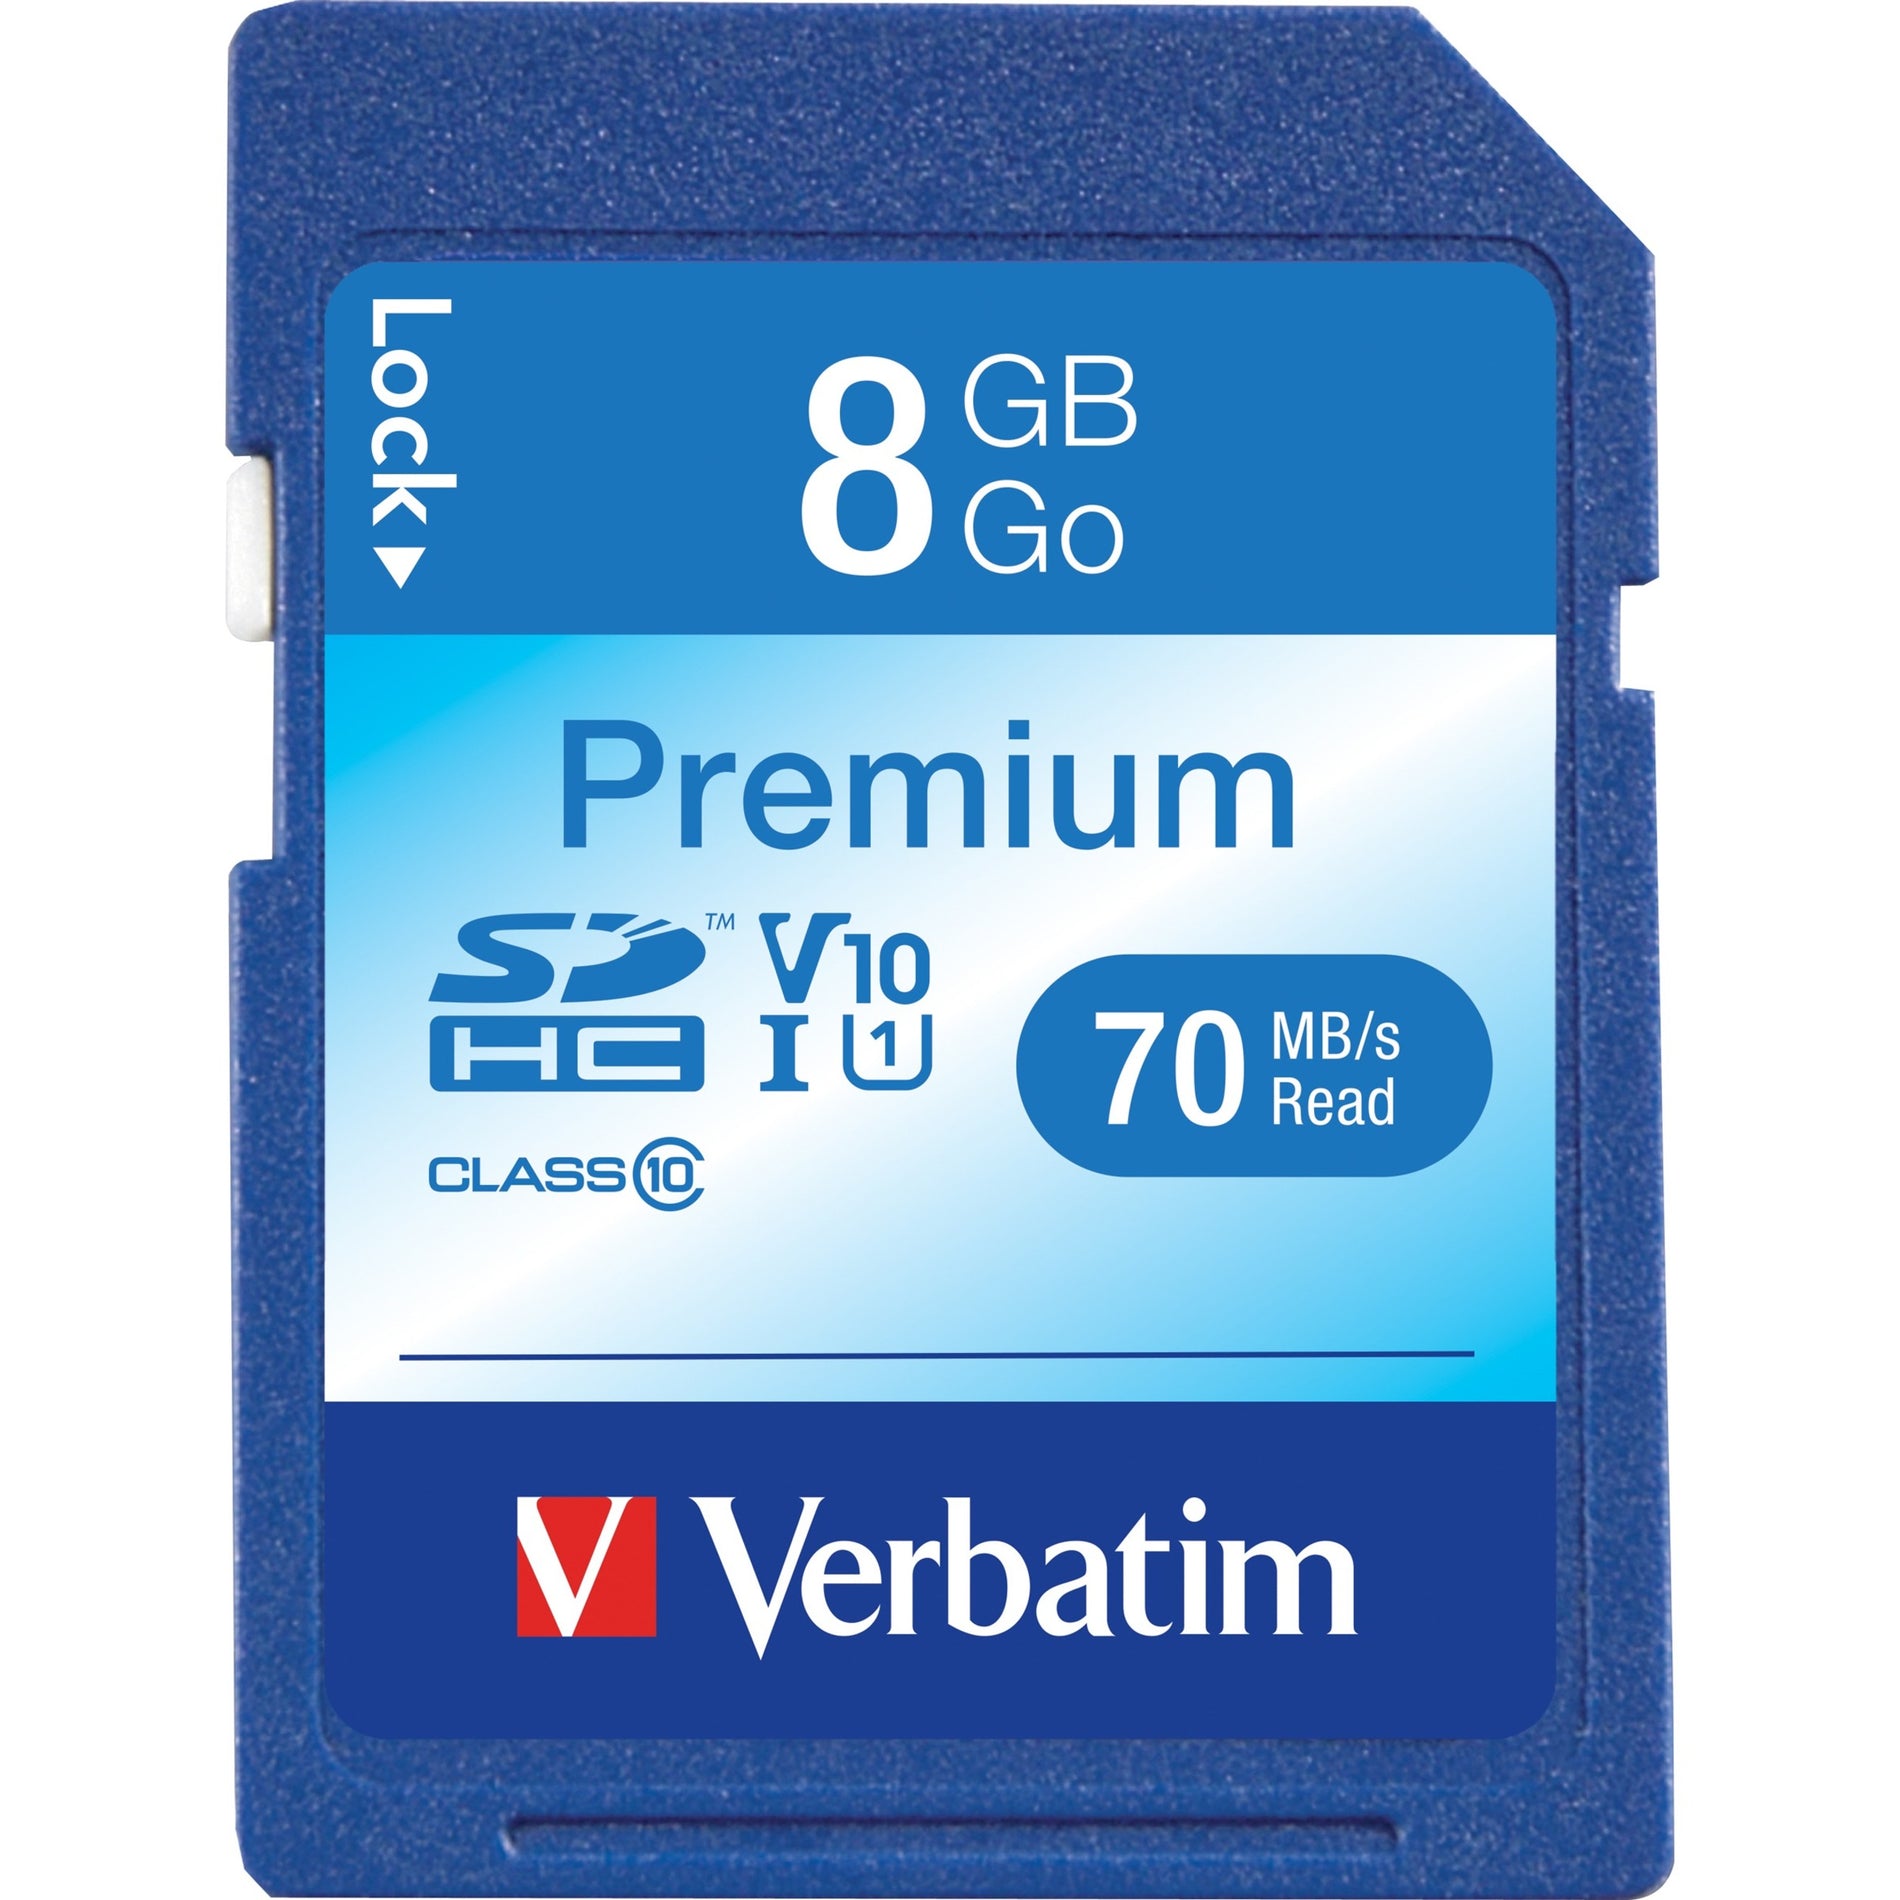 Verbatim 96318 Premium SDHC Memory Card, 8GB, UHS-I Class 10, Lifetime Warranty